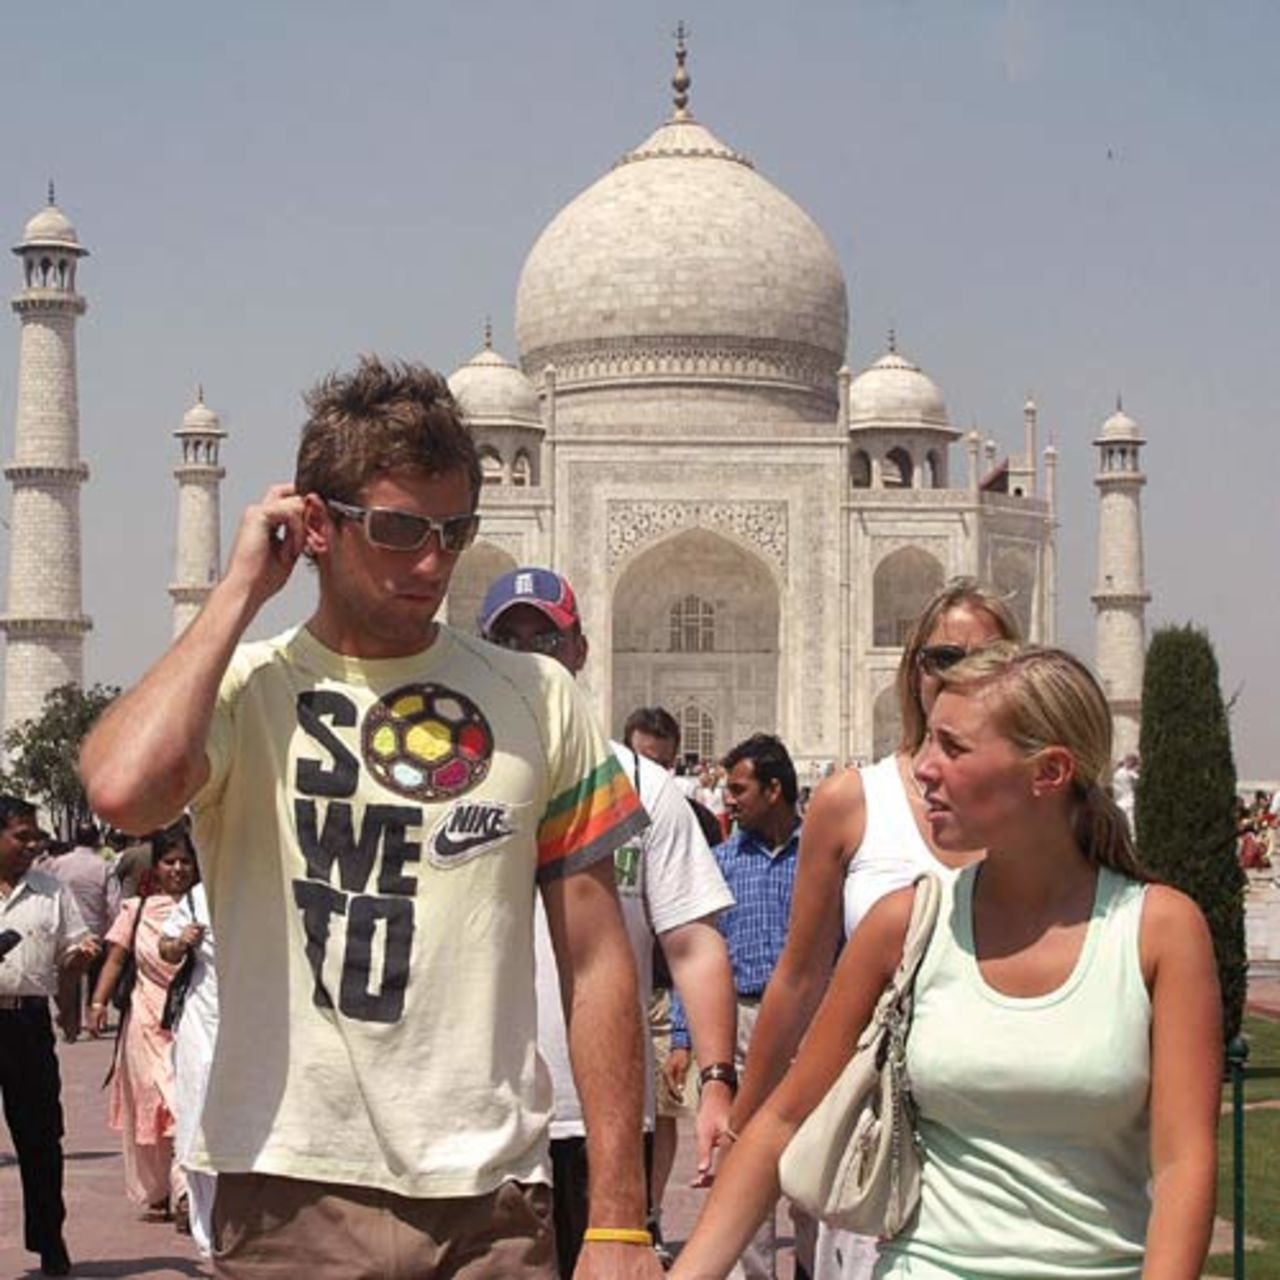 Liam Plunkett and his partner visit the Taj Mahal, March 29, 2006